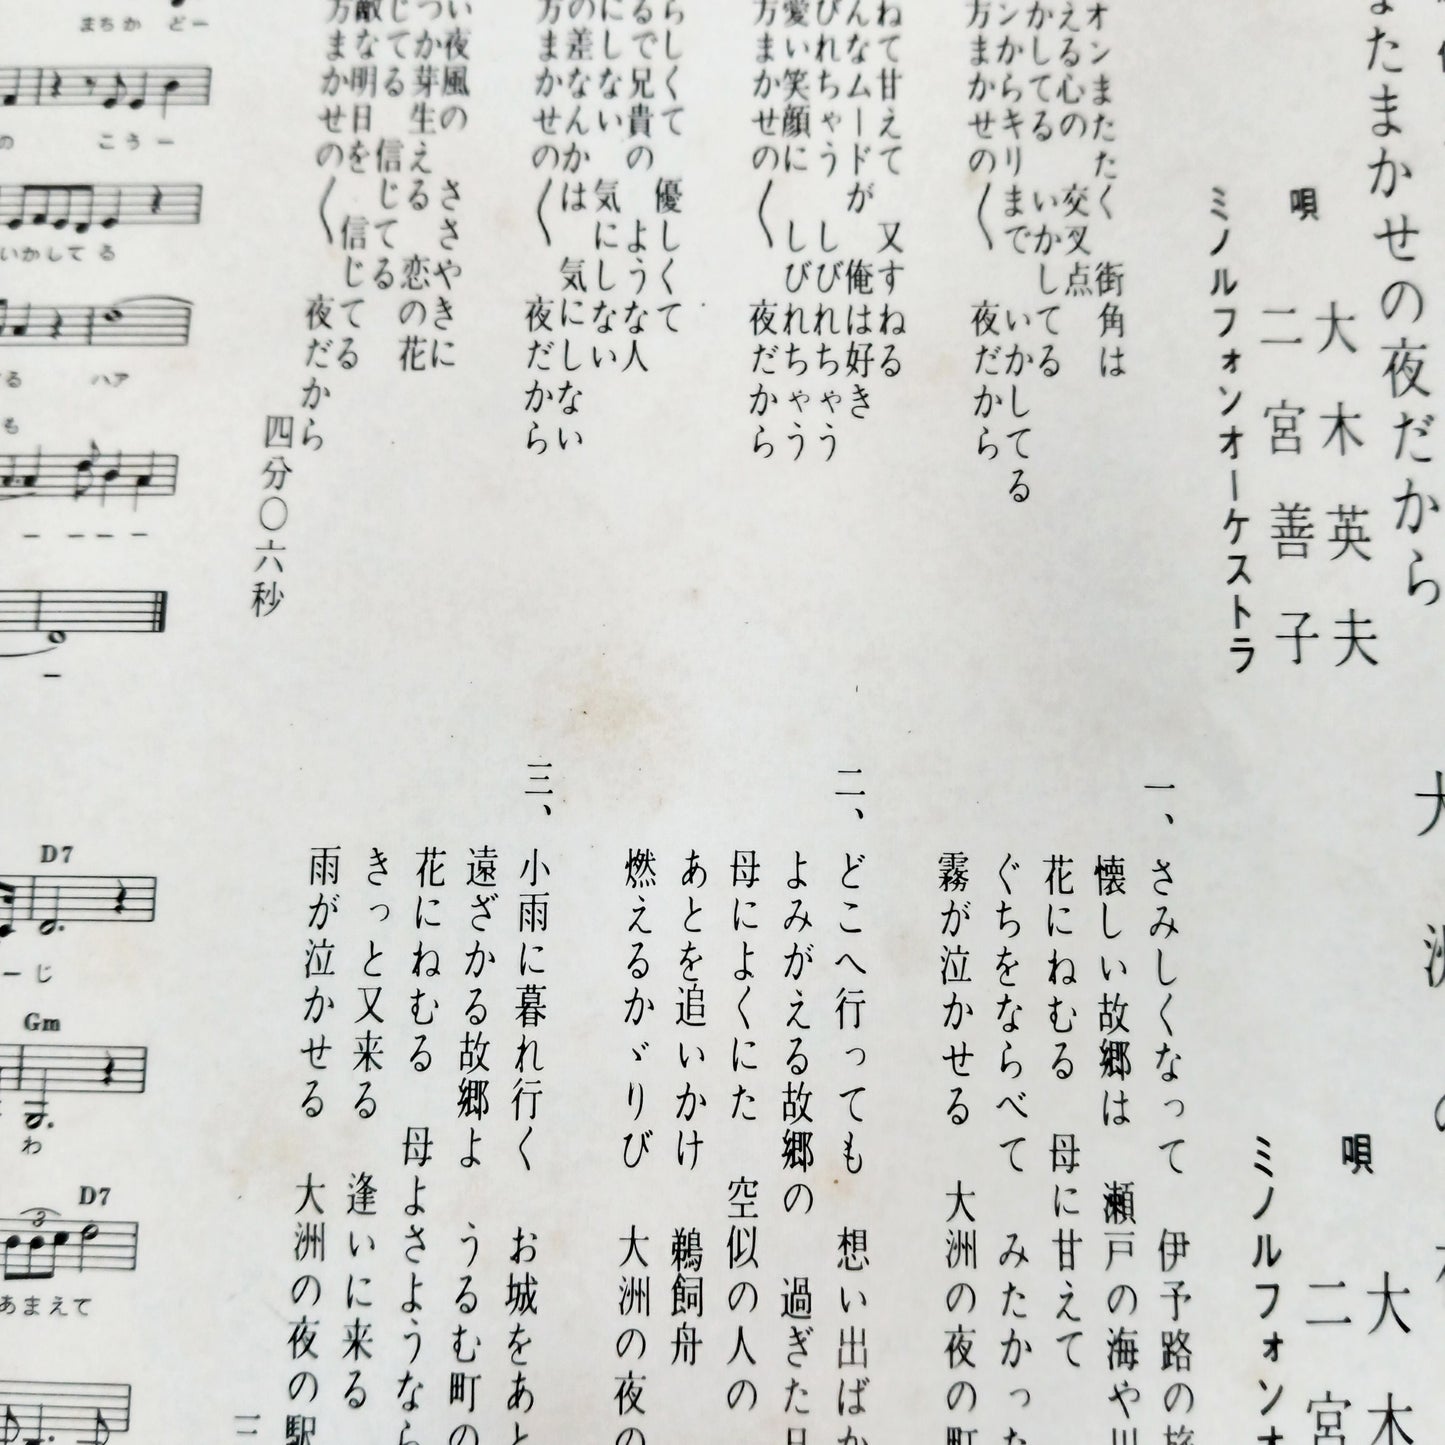 1971 Hideo Oki/Yoshiko Ninomiya B: Night in Ozu Japanese record vintage